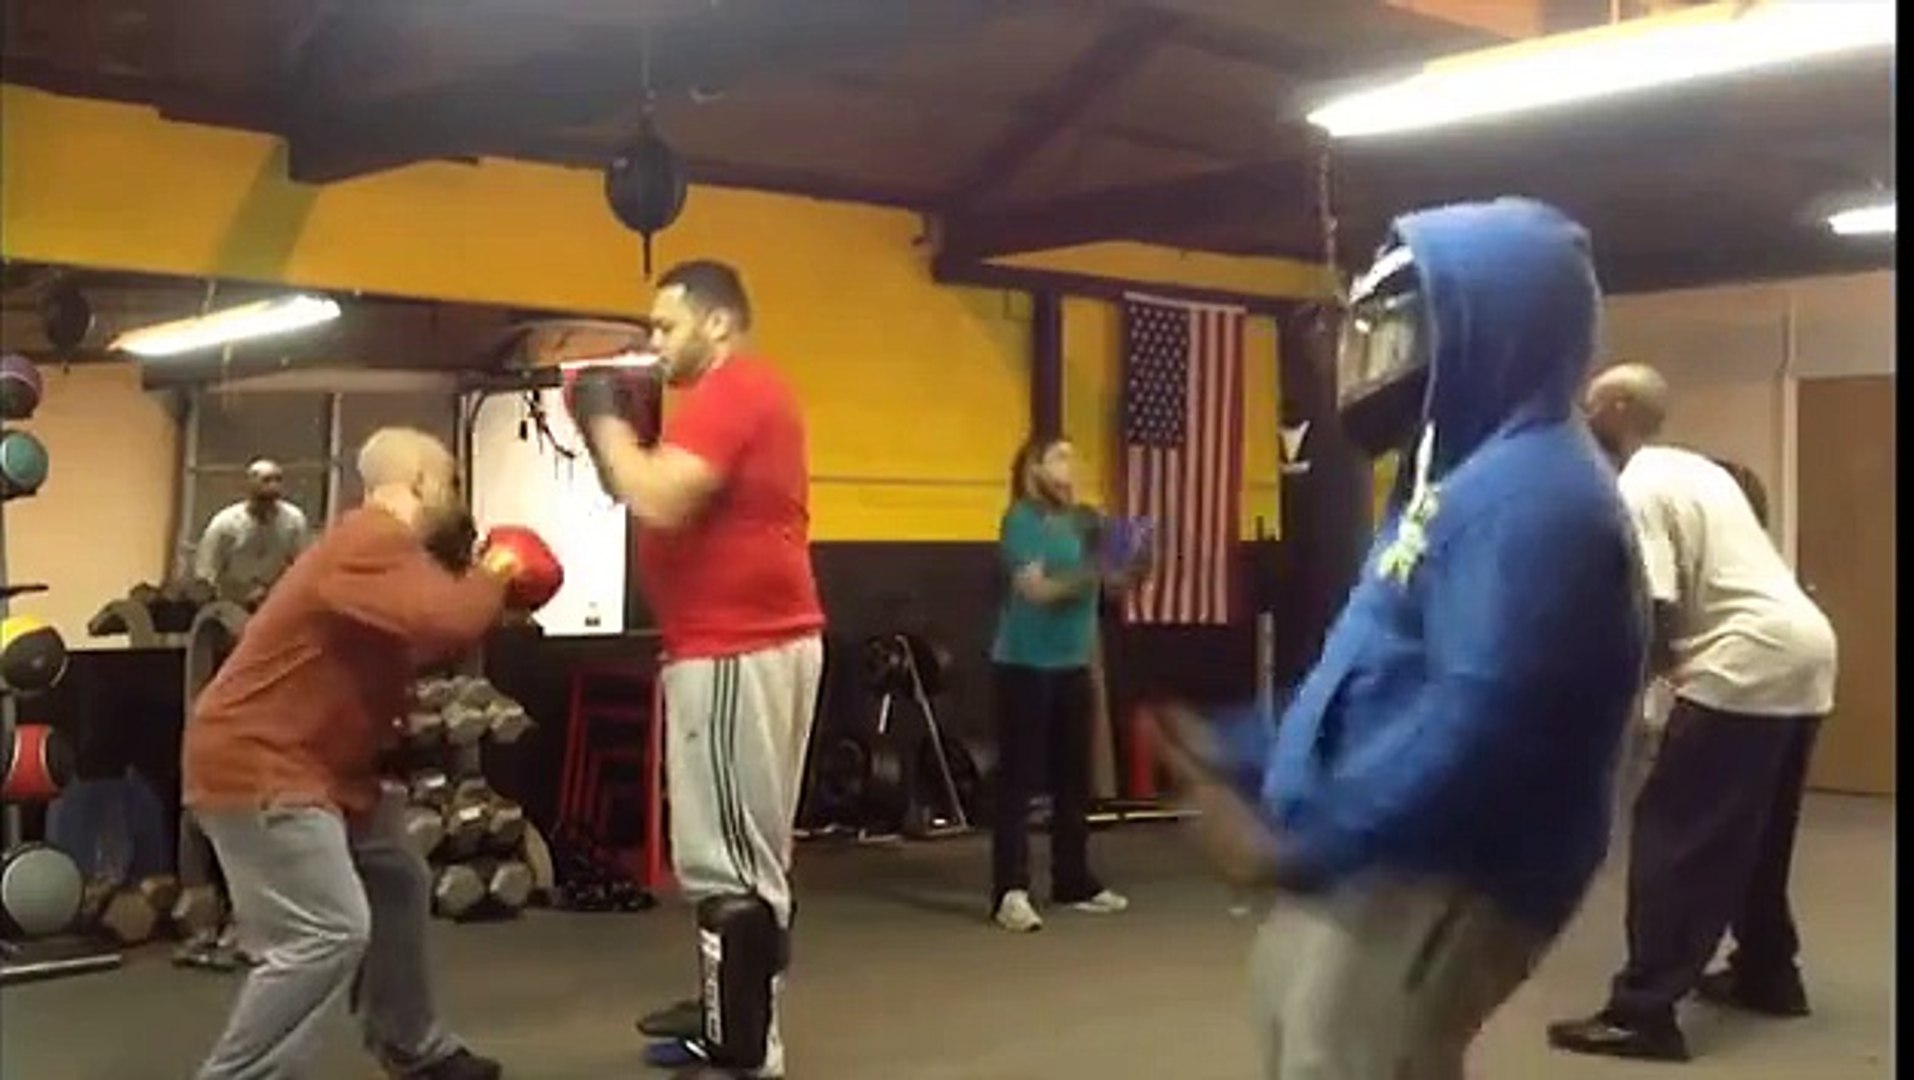 Harlem Shake V3 (Kickboxing Ninja Turtles)